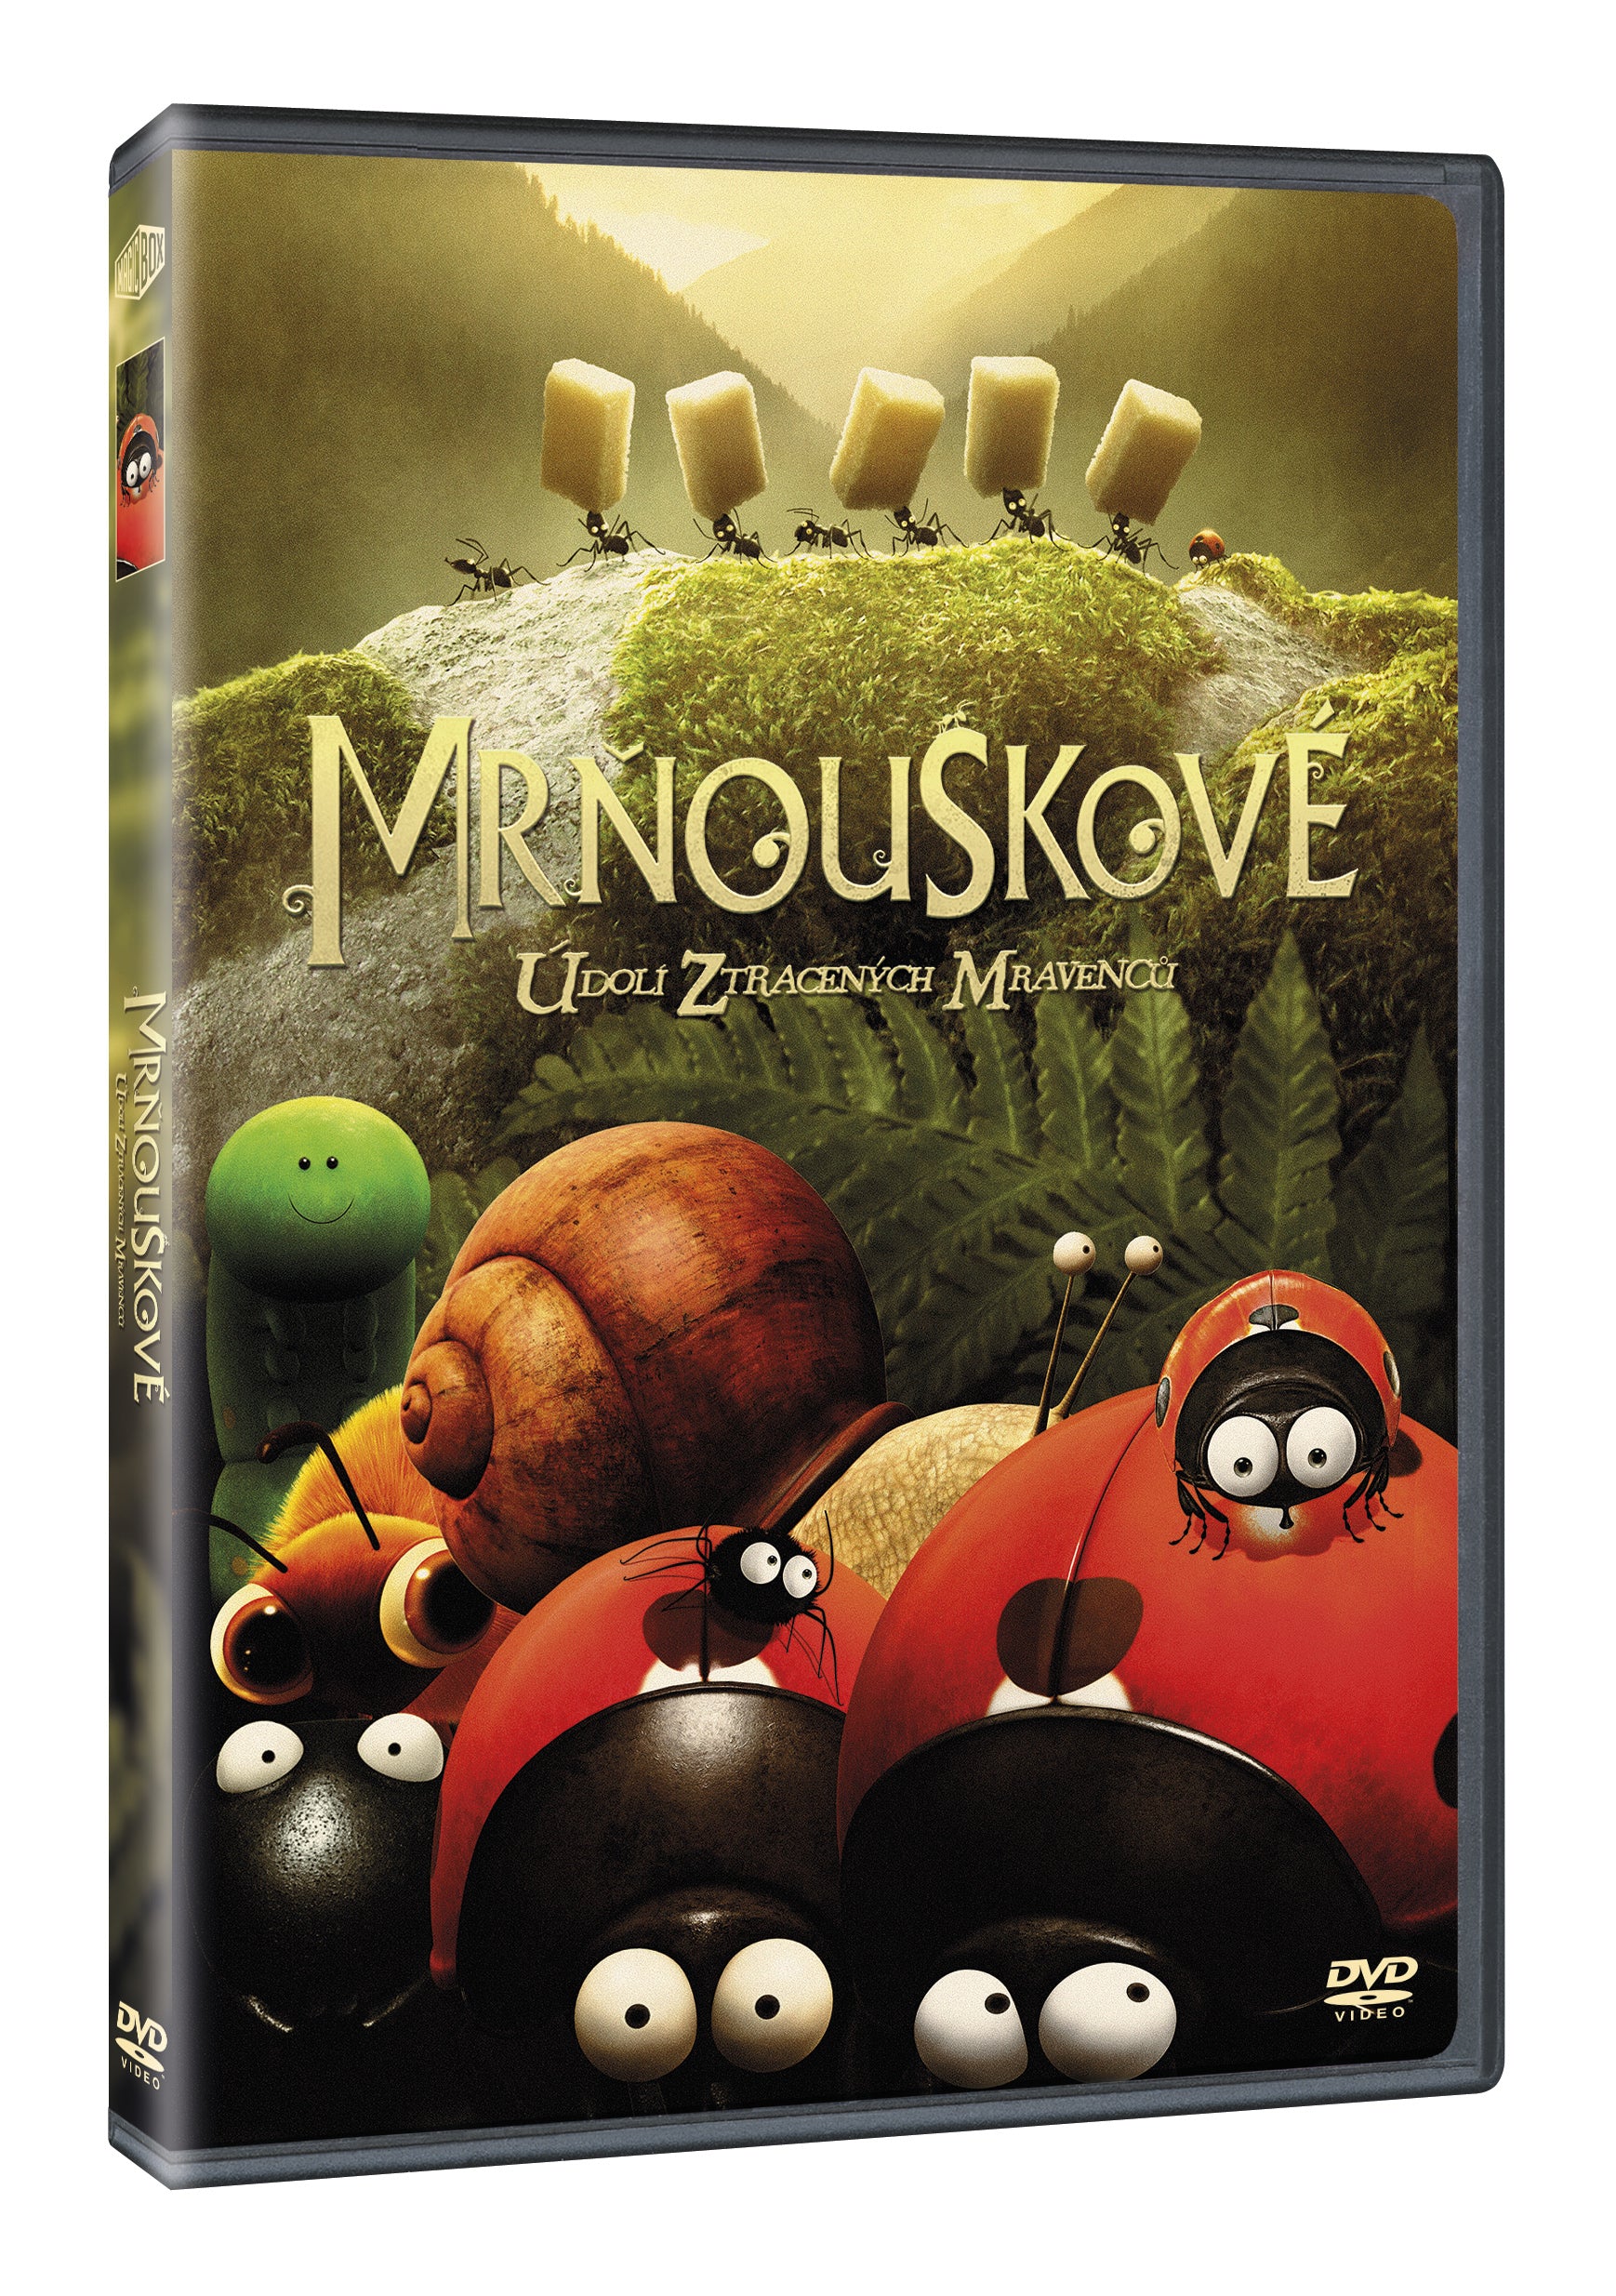 Mrnouskove: Udoli ztracenych mravencu DVD / Minuscule – La vallee des fourmis perdues